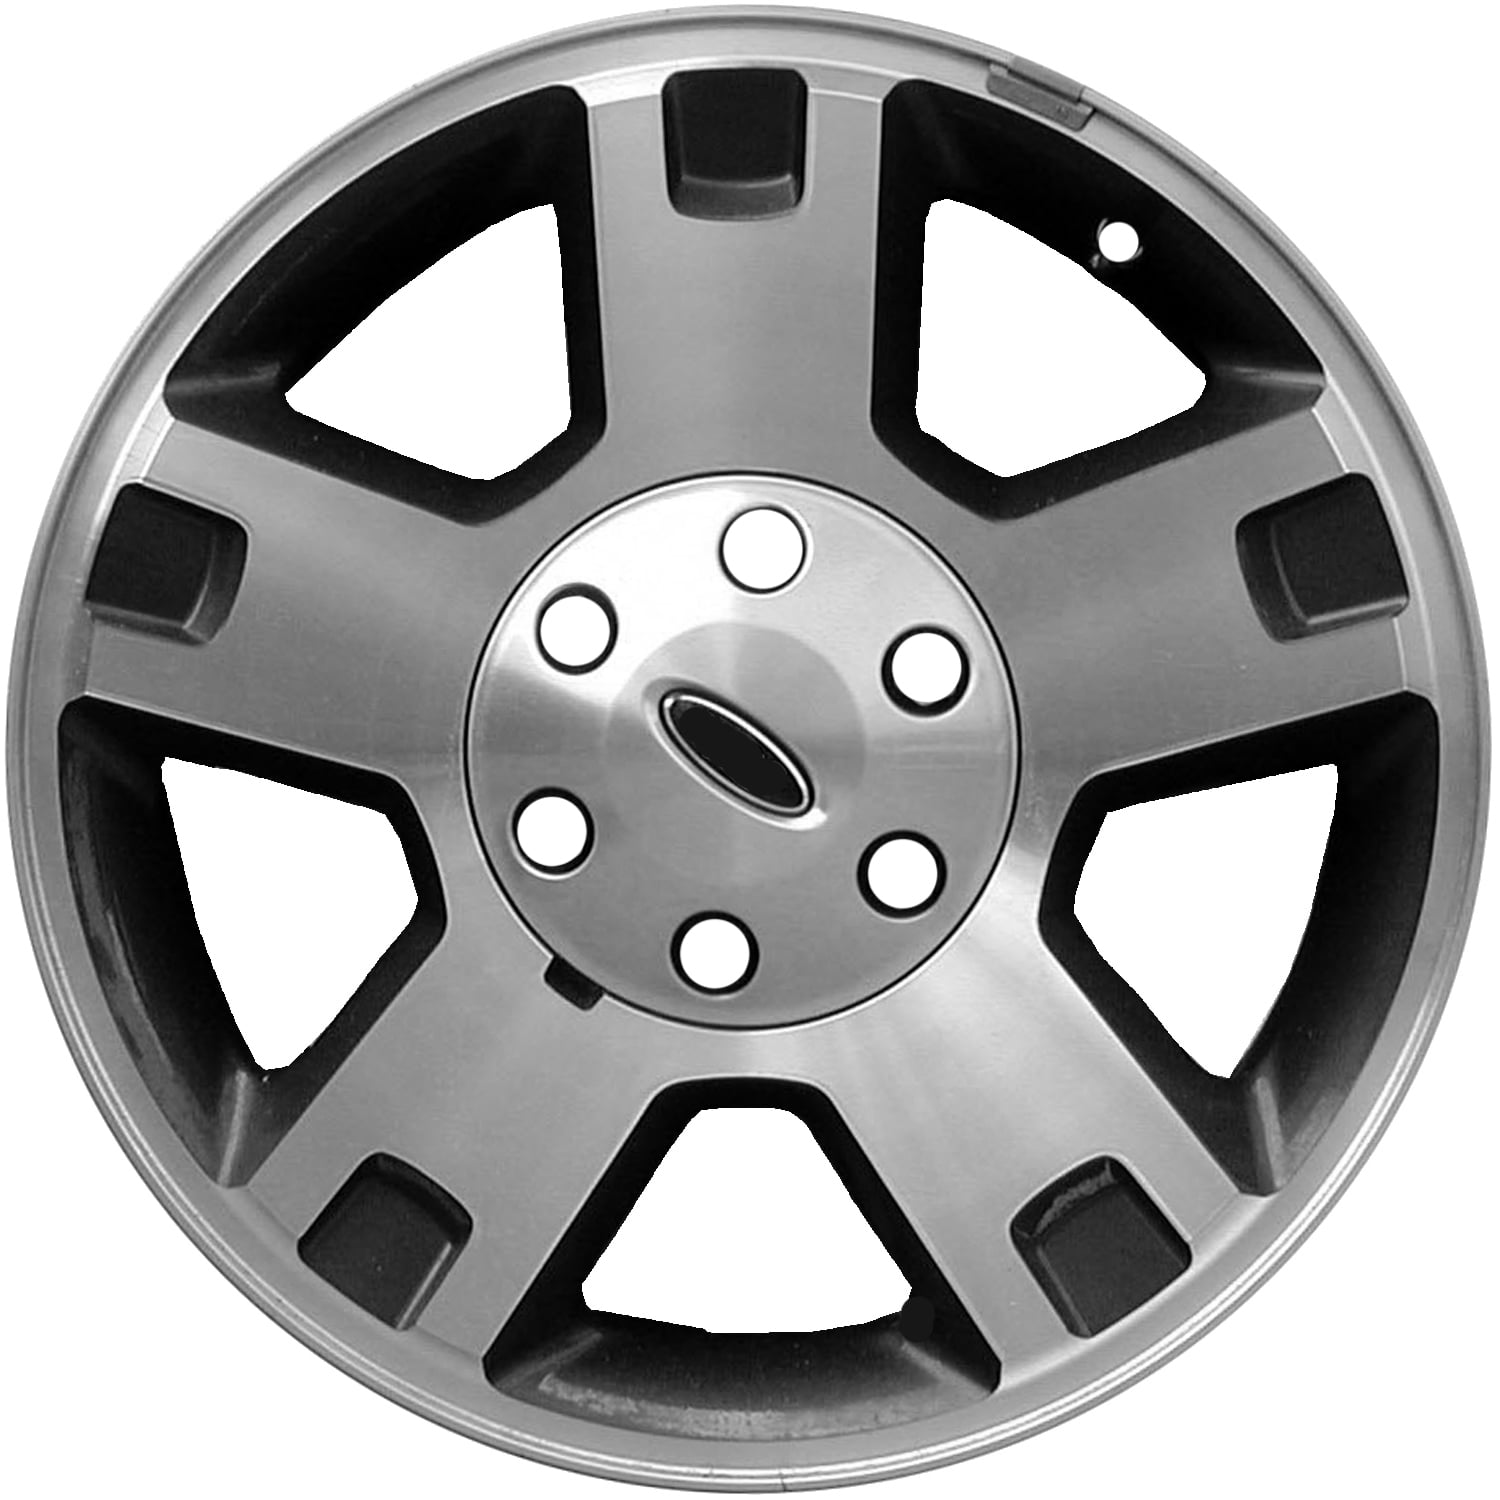 70870 OEM Reconditioned Aluminum Wheel 18x8 Fits 2015-2016 Hyundai Genesis Sedan